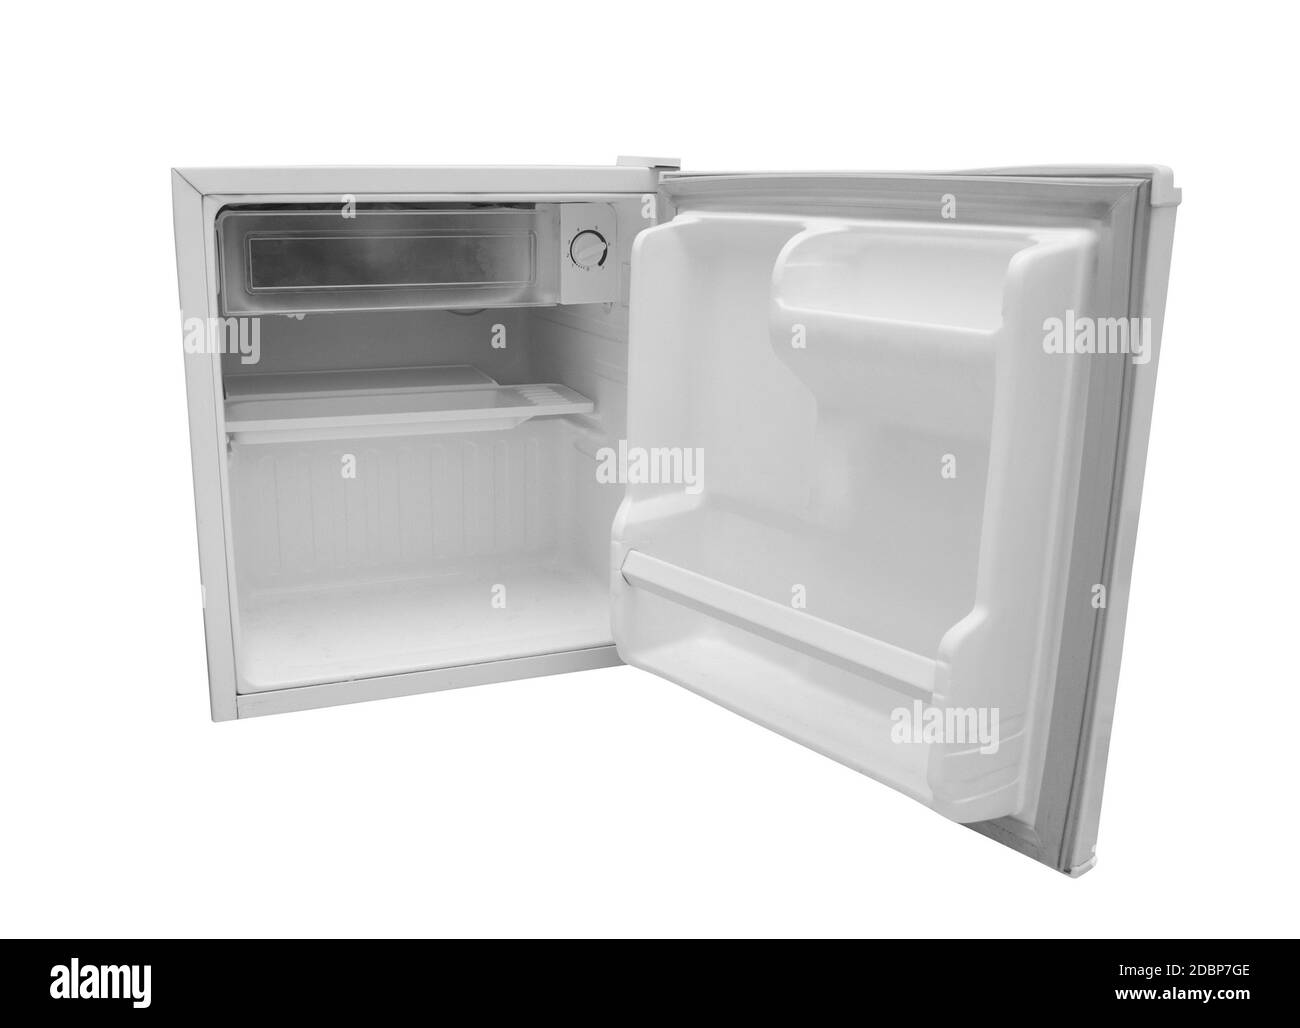 Empty fridge Black and White Stock Photos & Images - Alamy